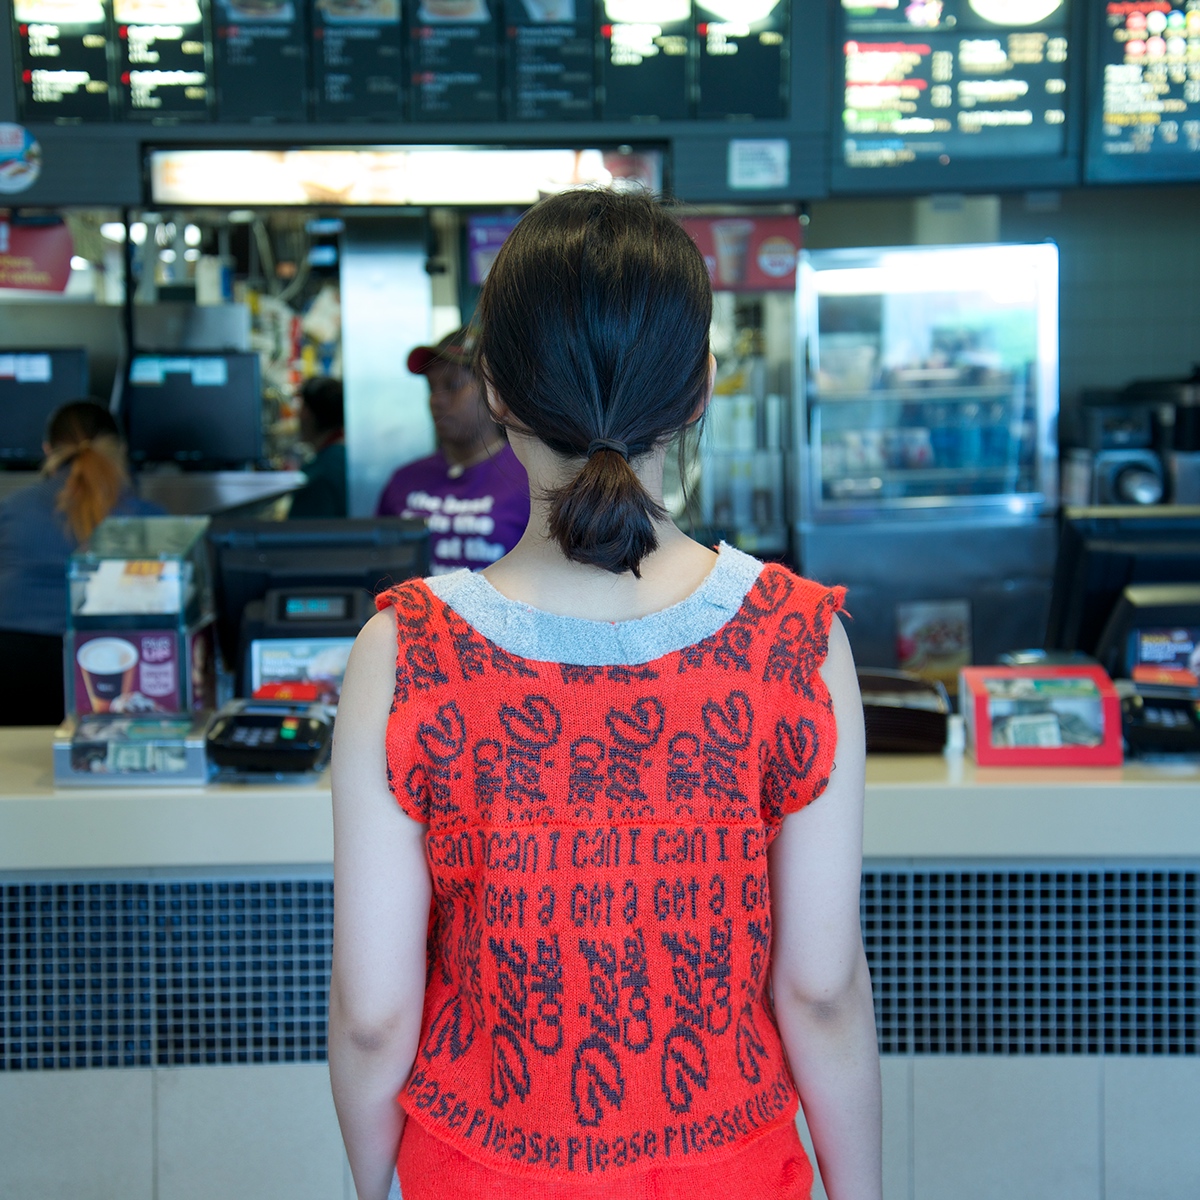 Food  diet coke coke burger twizzler foodinspired stomach pattern knitwear knit skirt top outfit croptop